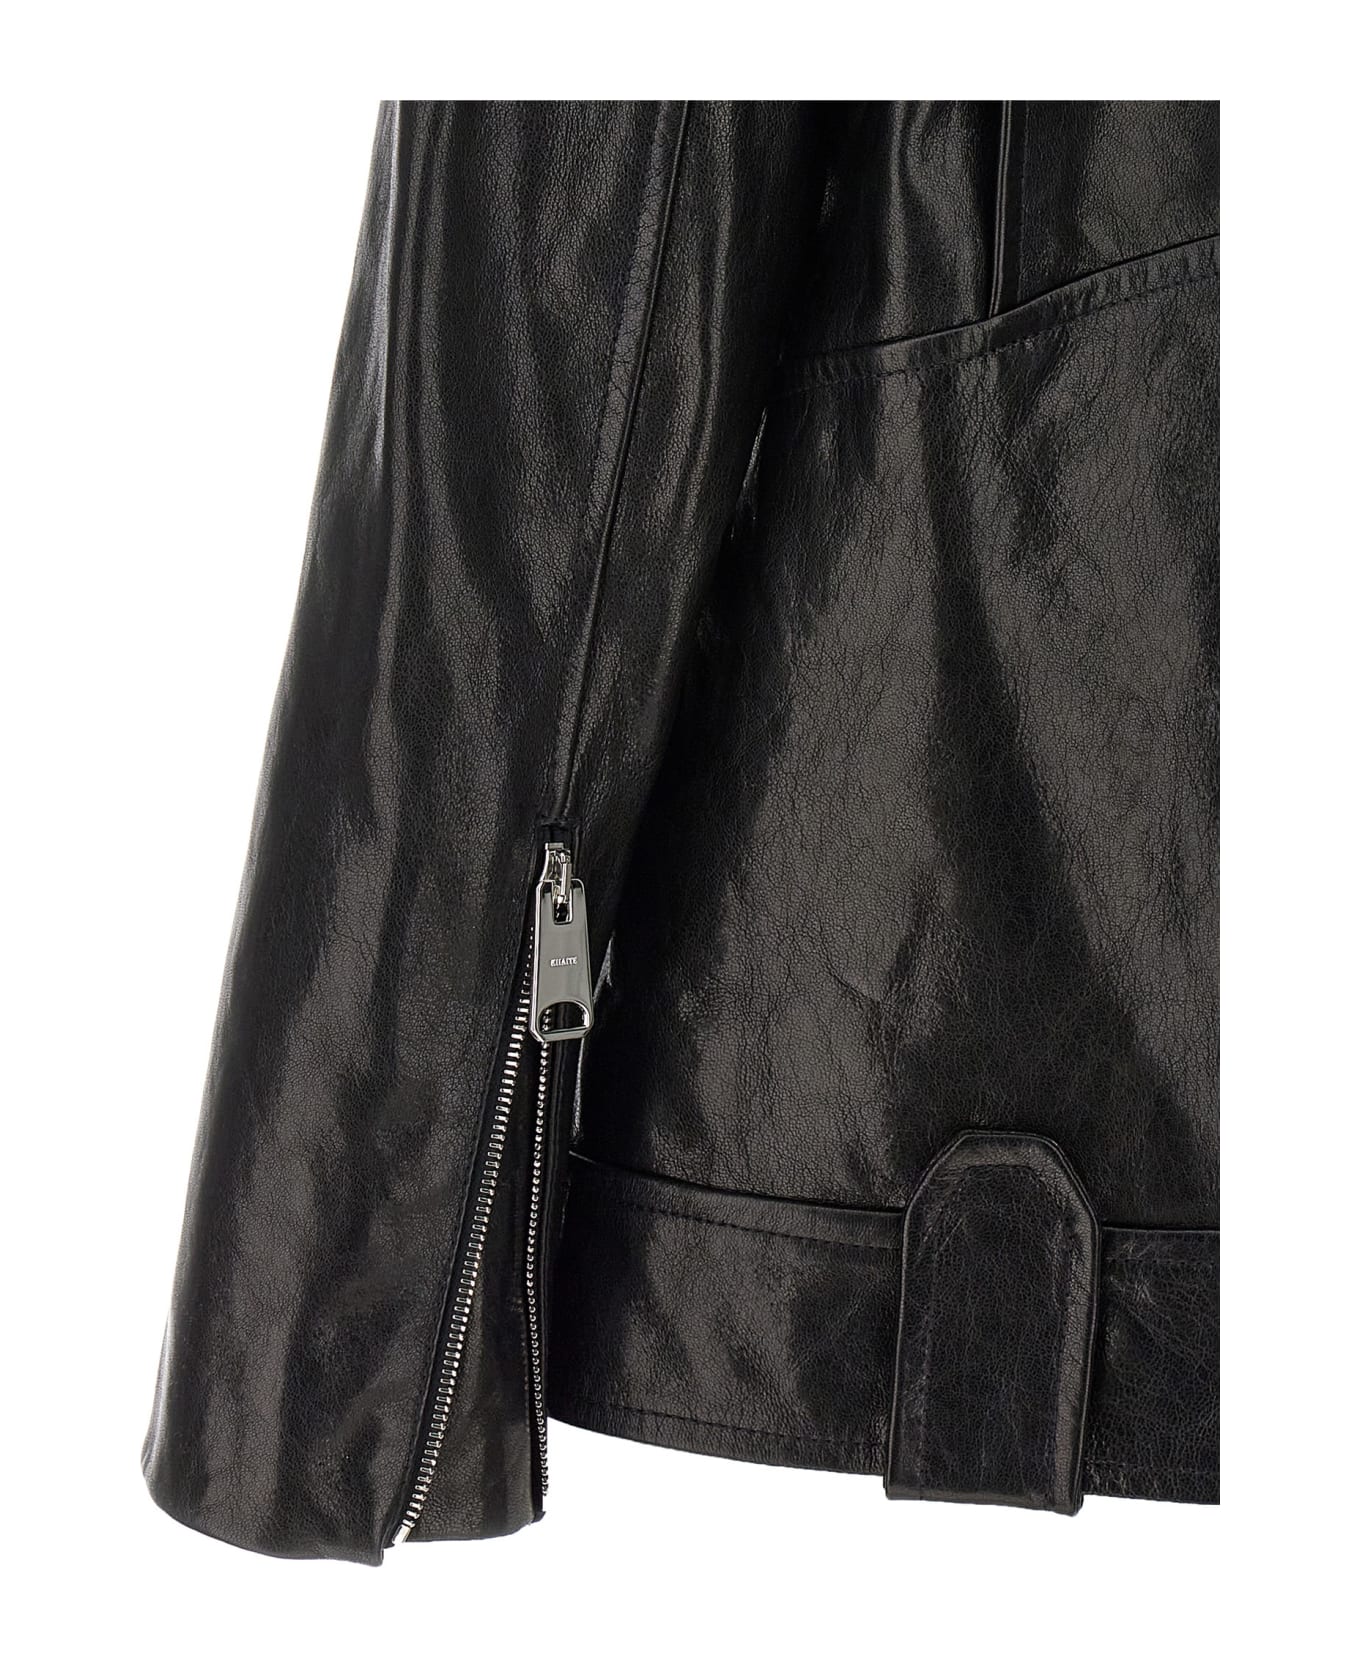 Khaite 'hanson' Leather Biker Jacket - Black   レザージャケット